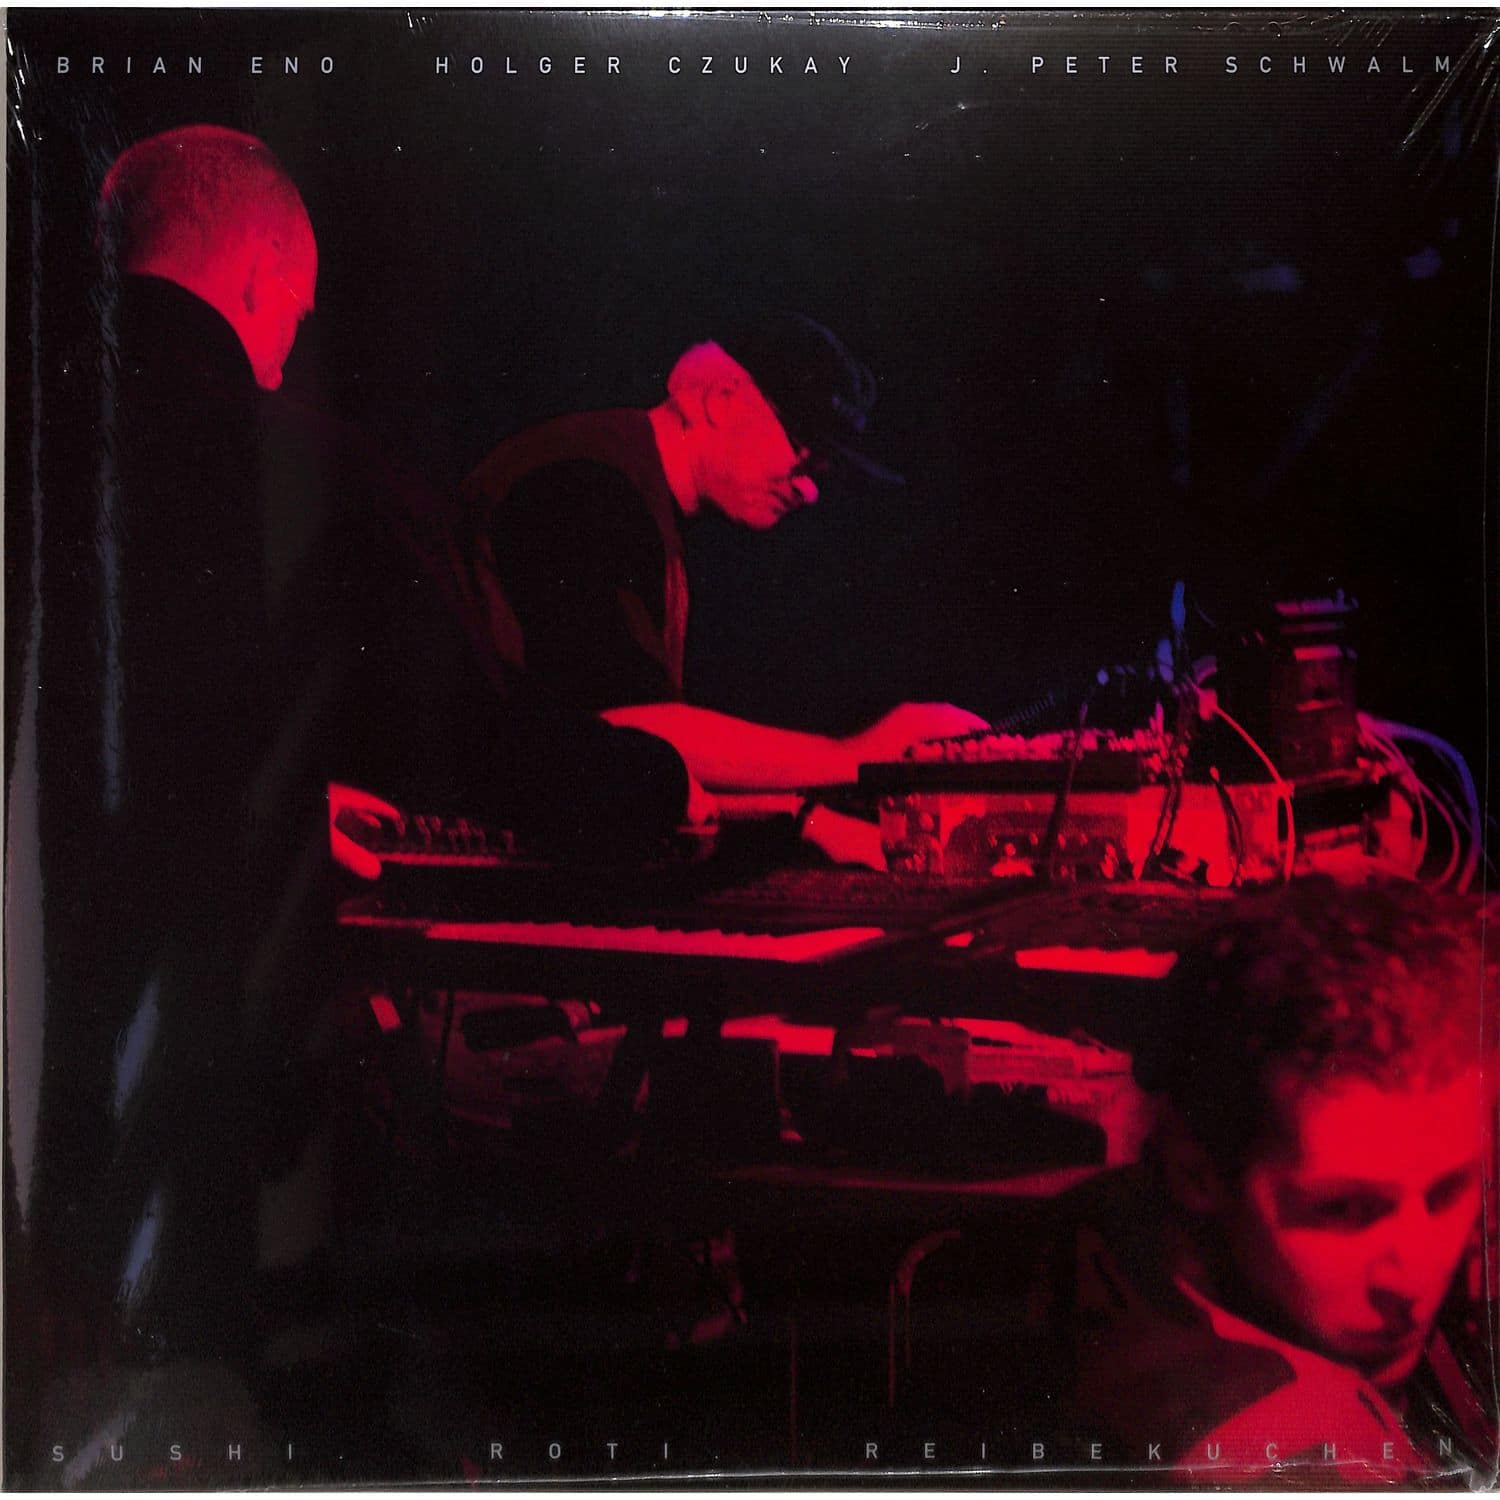 Brian Eno / Holger Czukay / J Peter Schwalm - SUSHI ROTI REIBEKUCHEN 